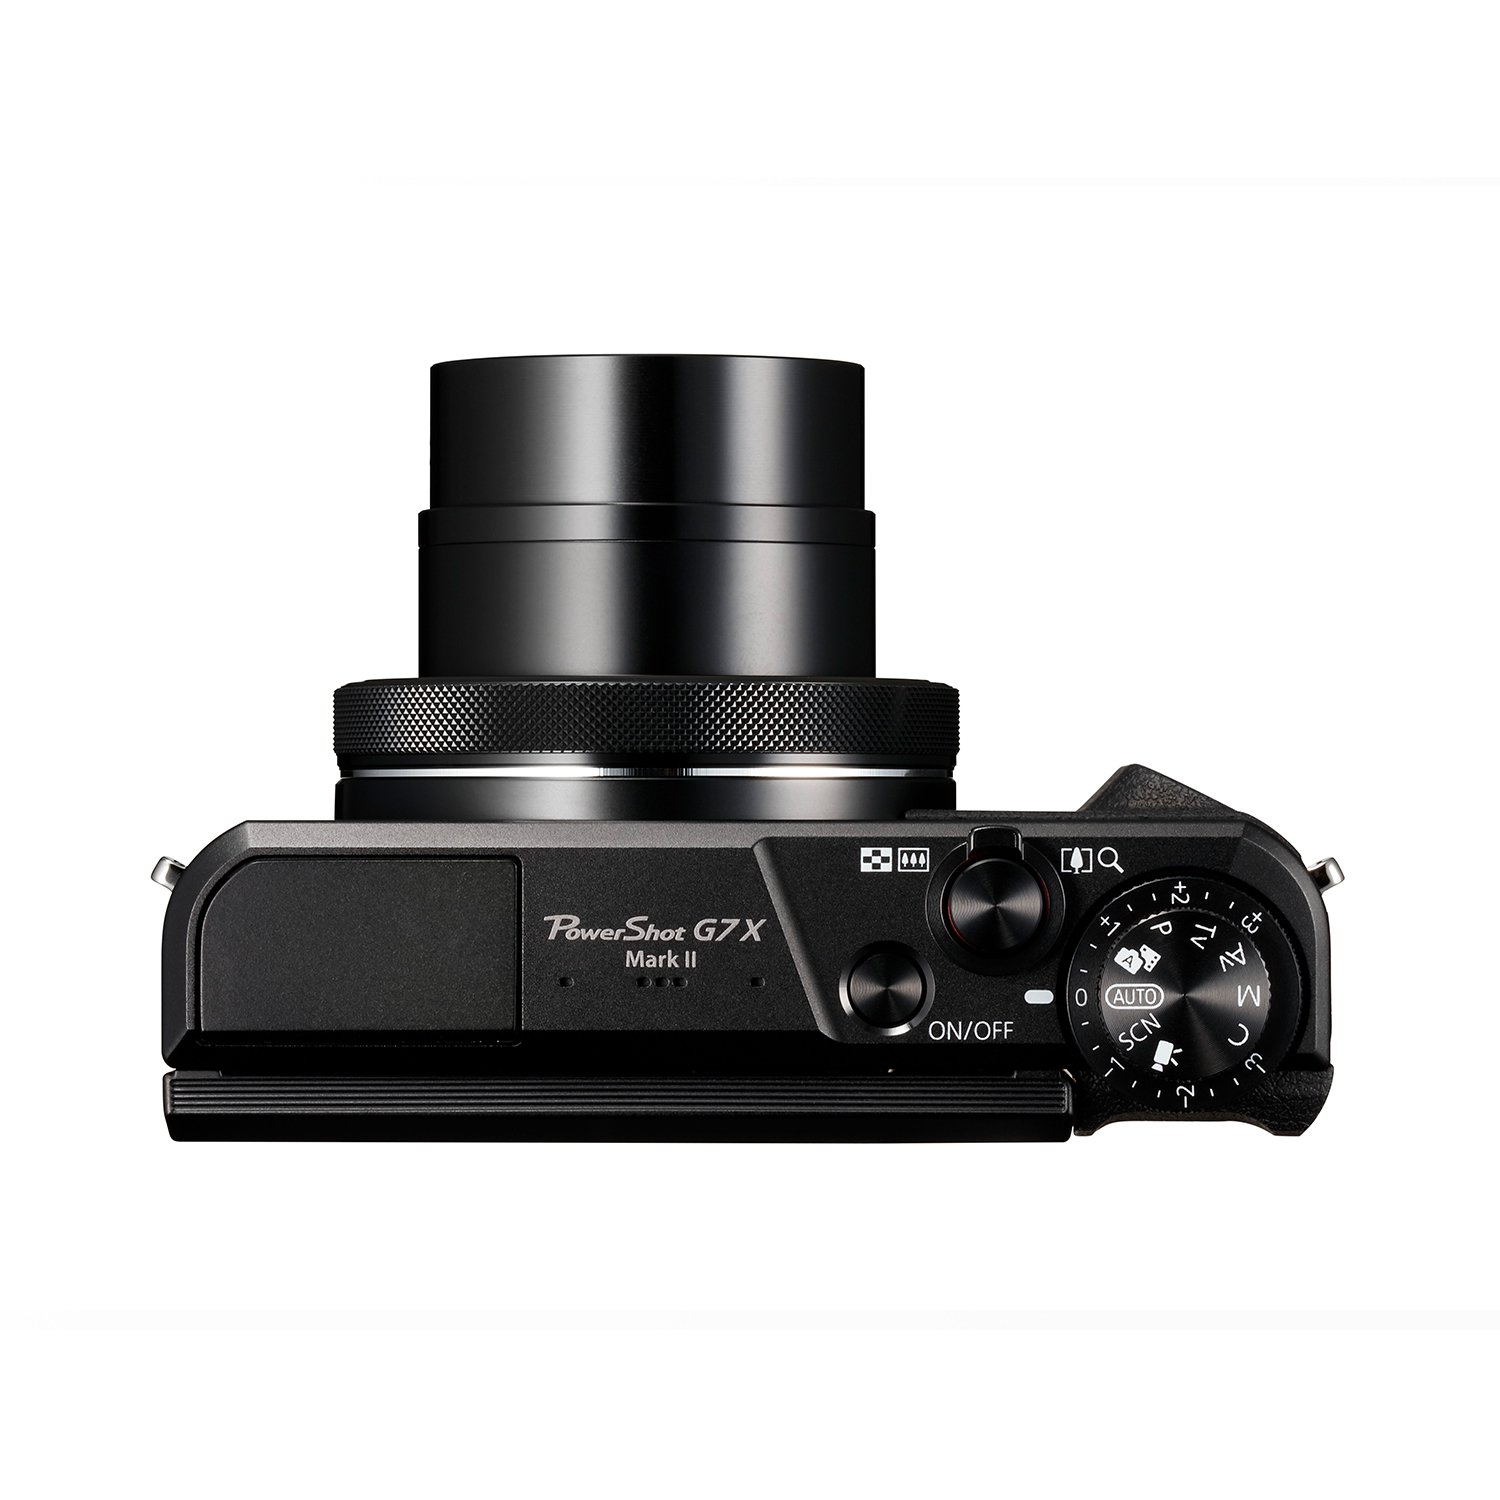 Canon PowerShot G7 X Mark III - Cameras - Canon Malta